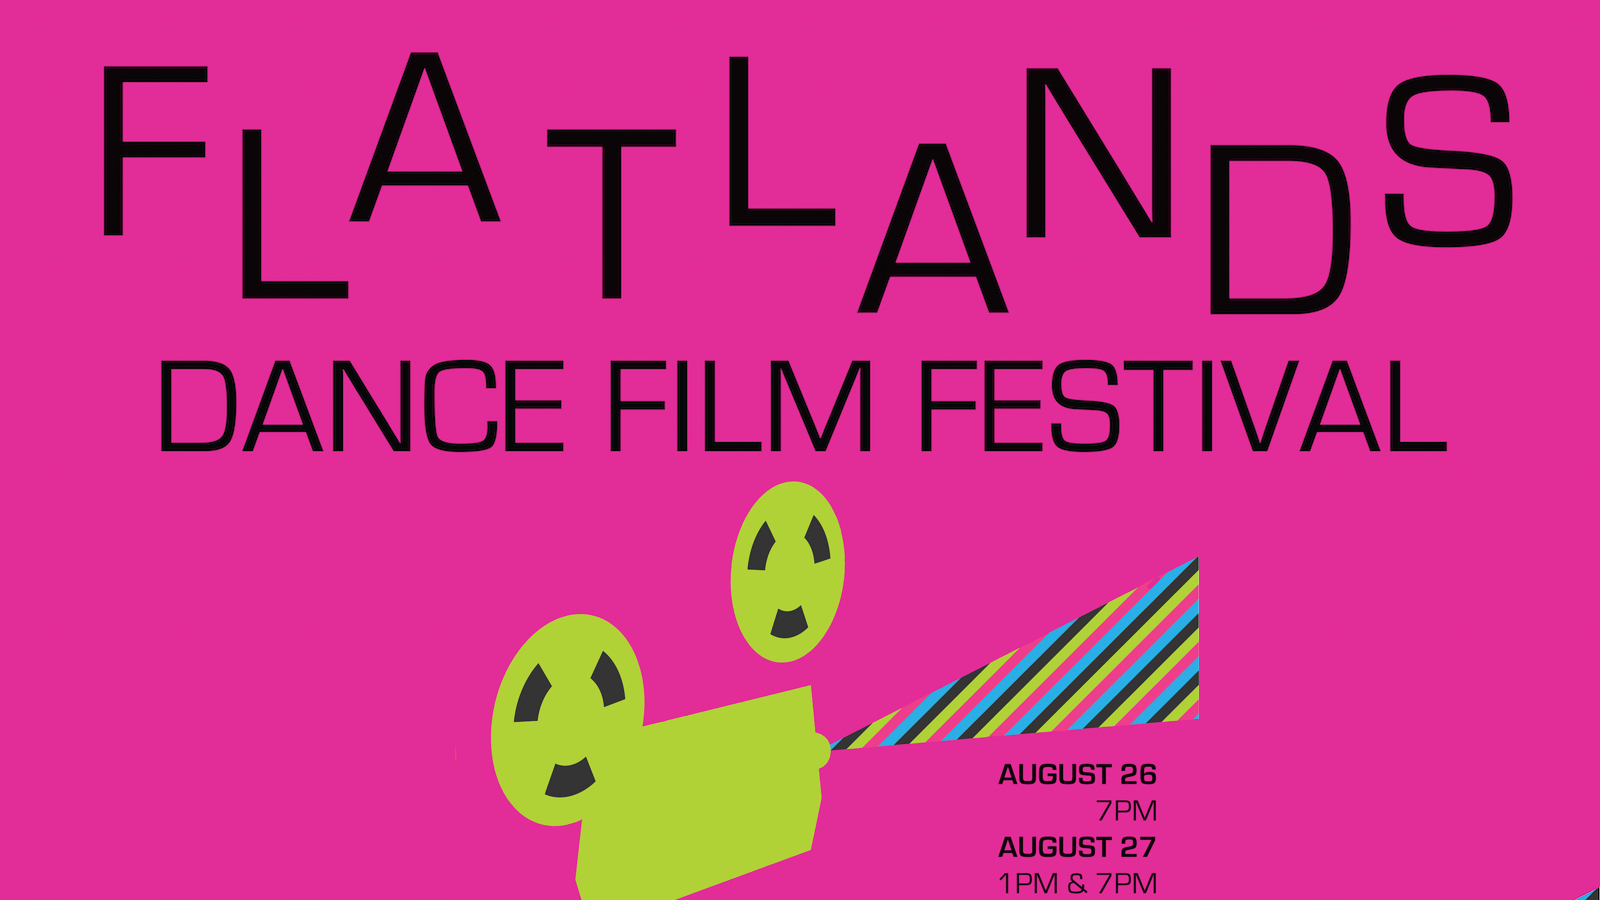 Flatlands Film Festival Aug 26-27 at 7pm